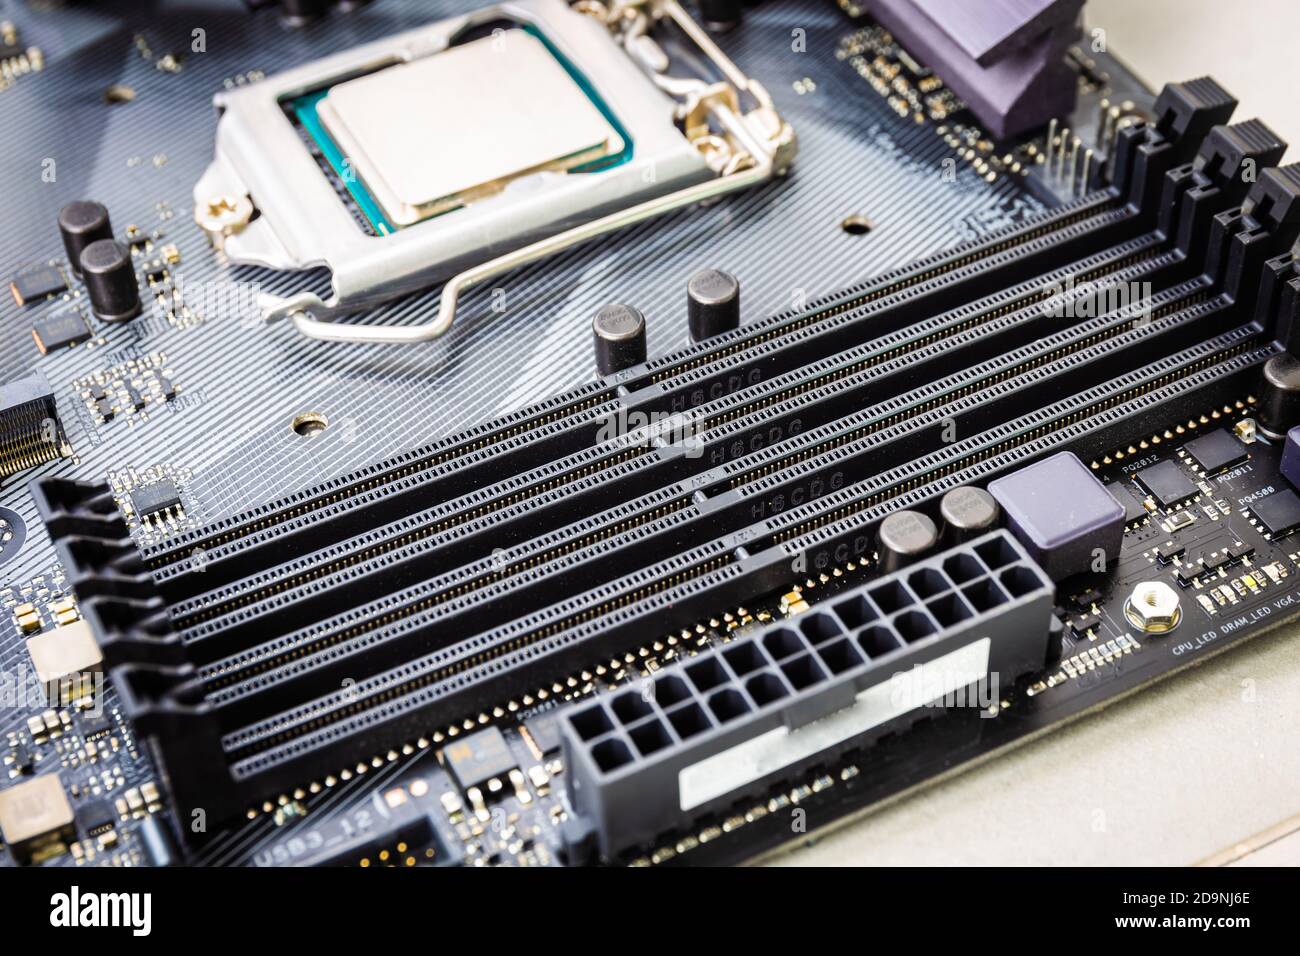 Closeup on empty RAM or random access memory slot on modern black motherboard Stock Photo